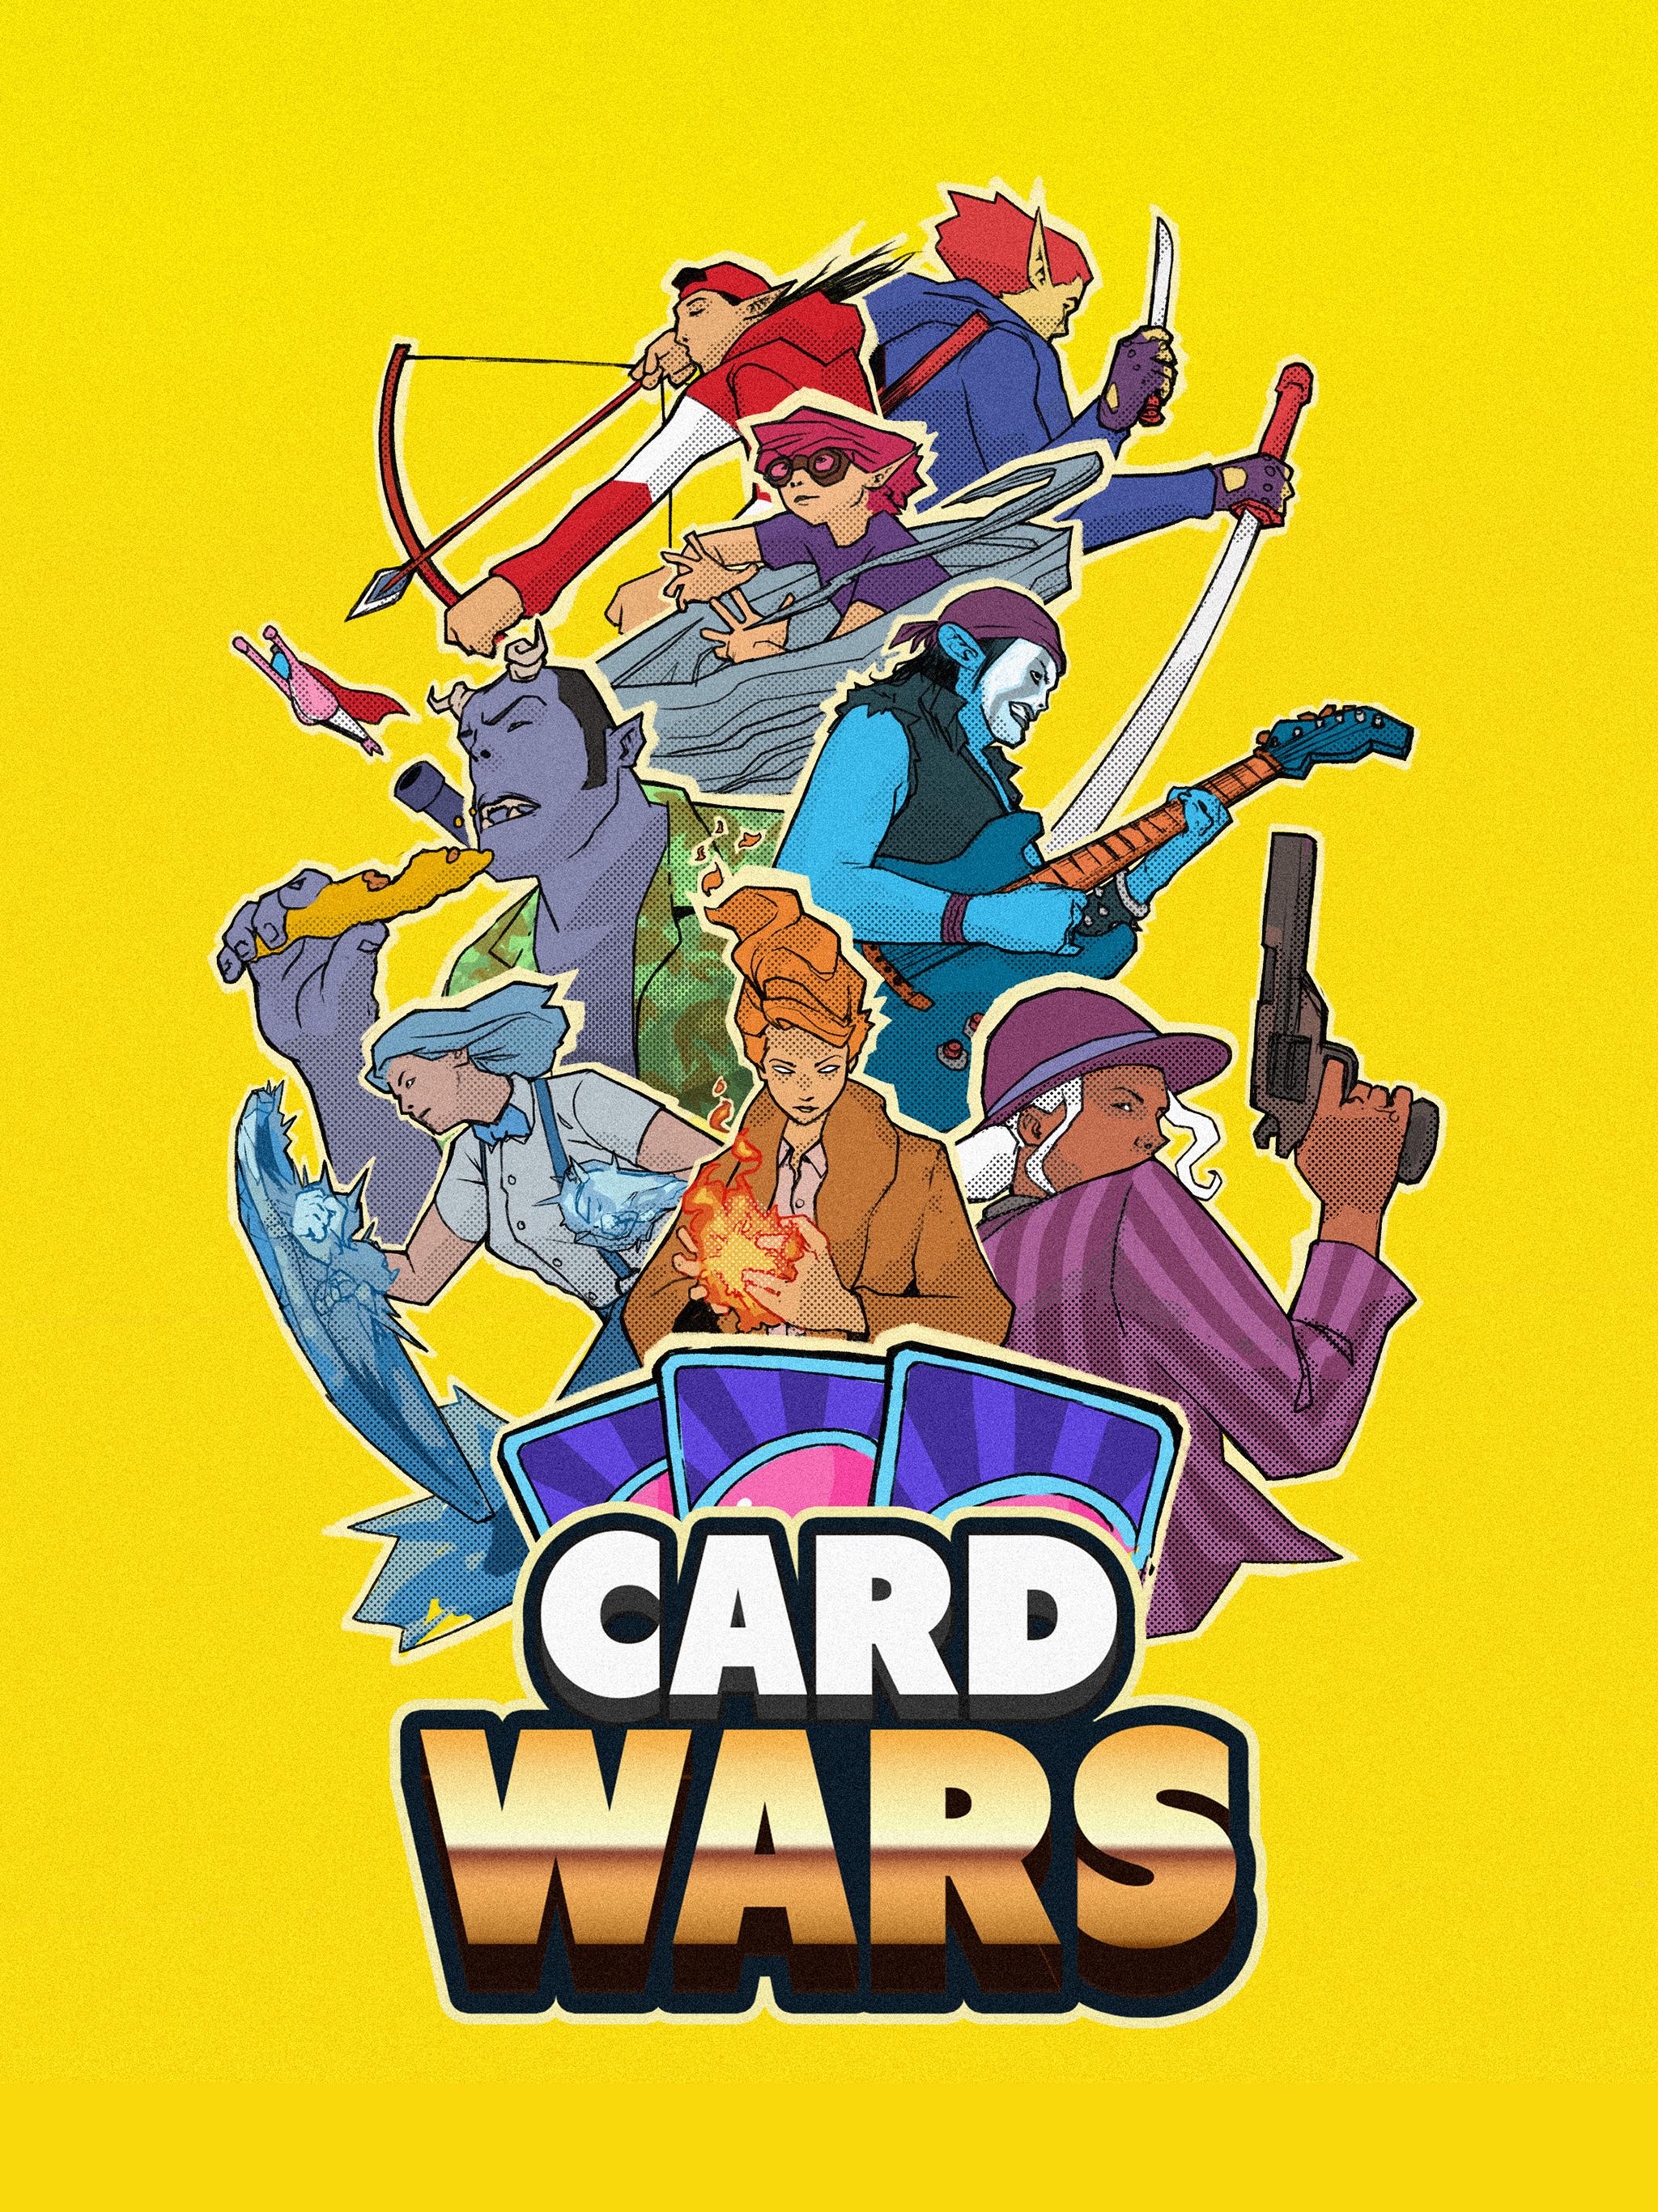 Card Wars Battle Royale CCG Lockdown brawl 3.1.0 Screenshot 10